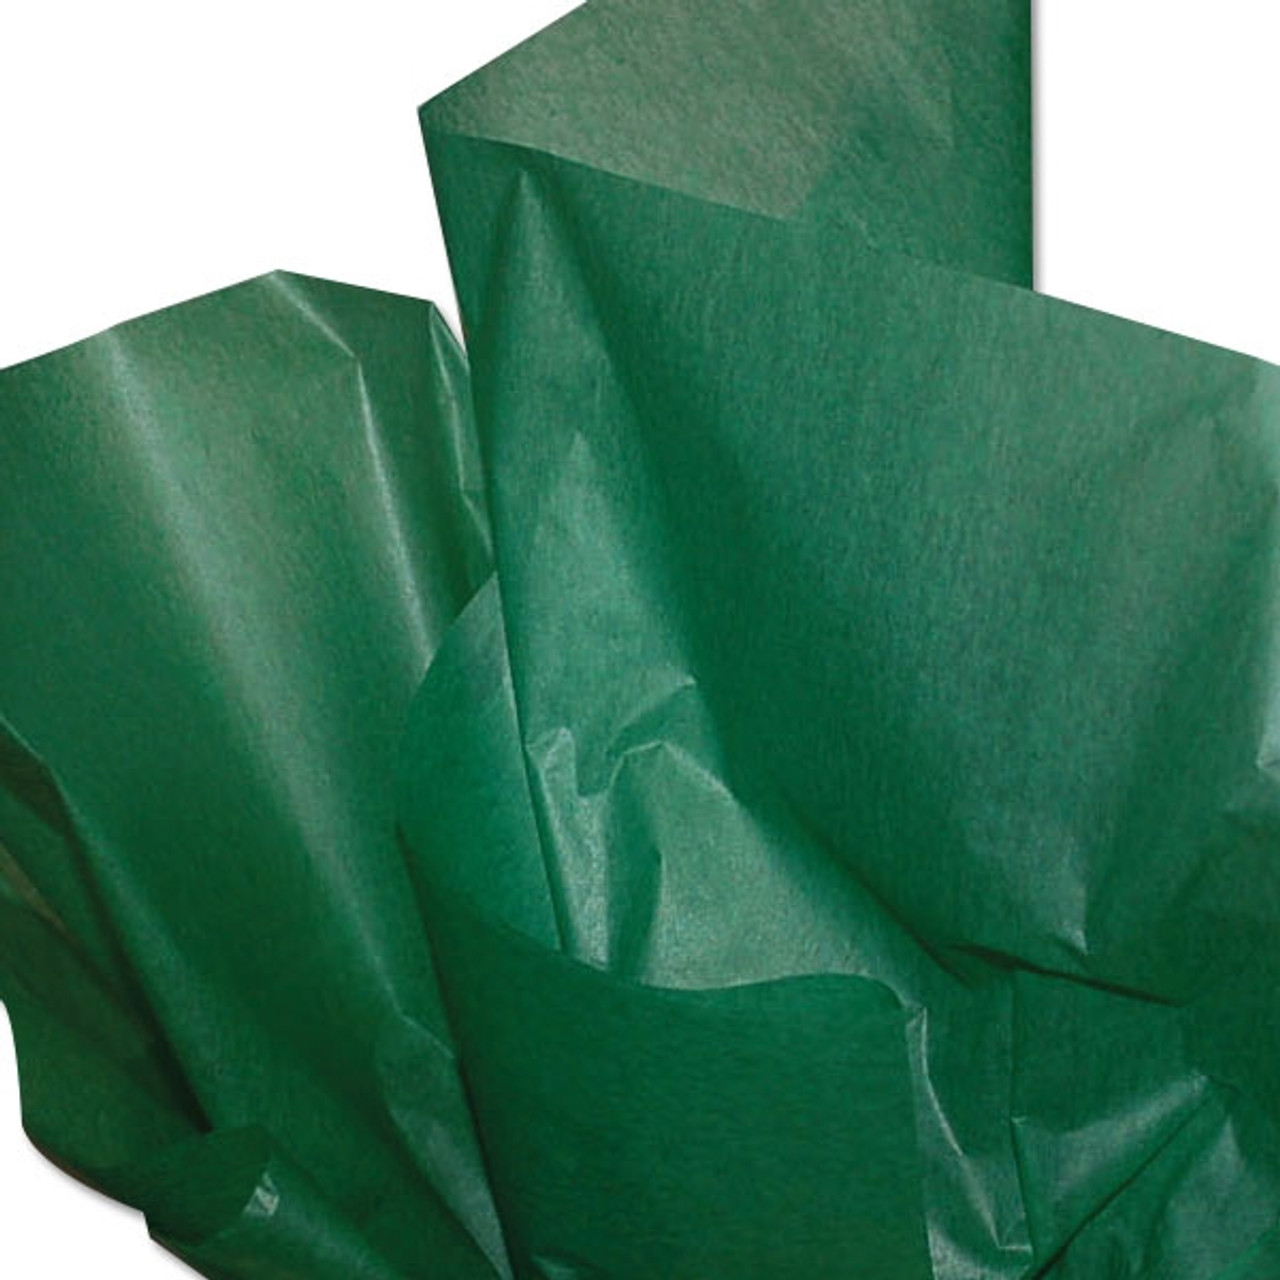 Waxed Tissue Paper - Krat - 480 Sheets per Ream